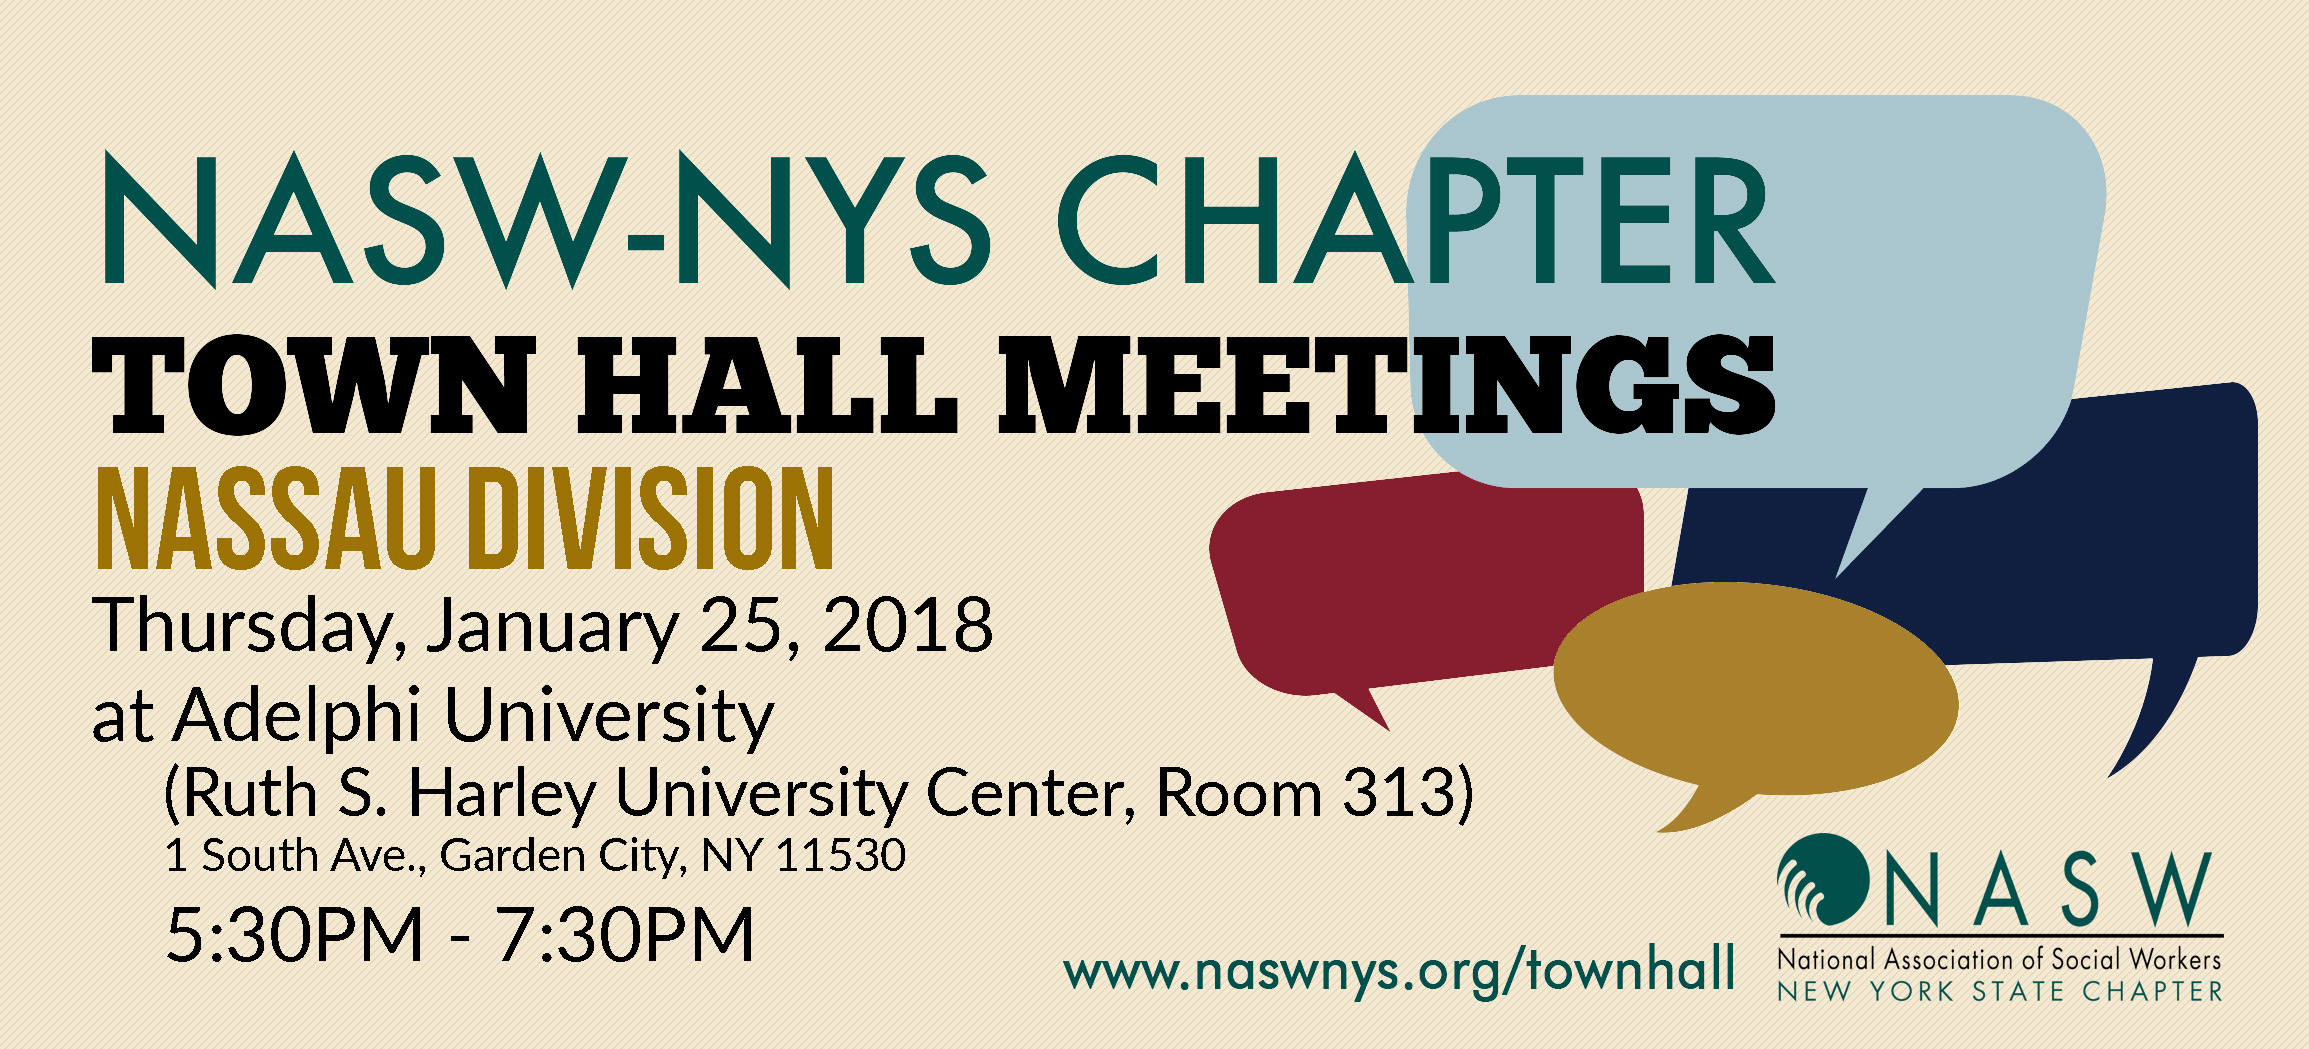 2018 Nassau Division Town Hall Meeting Nasw Nys